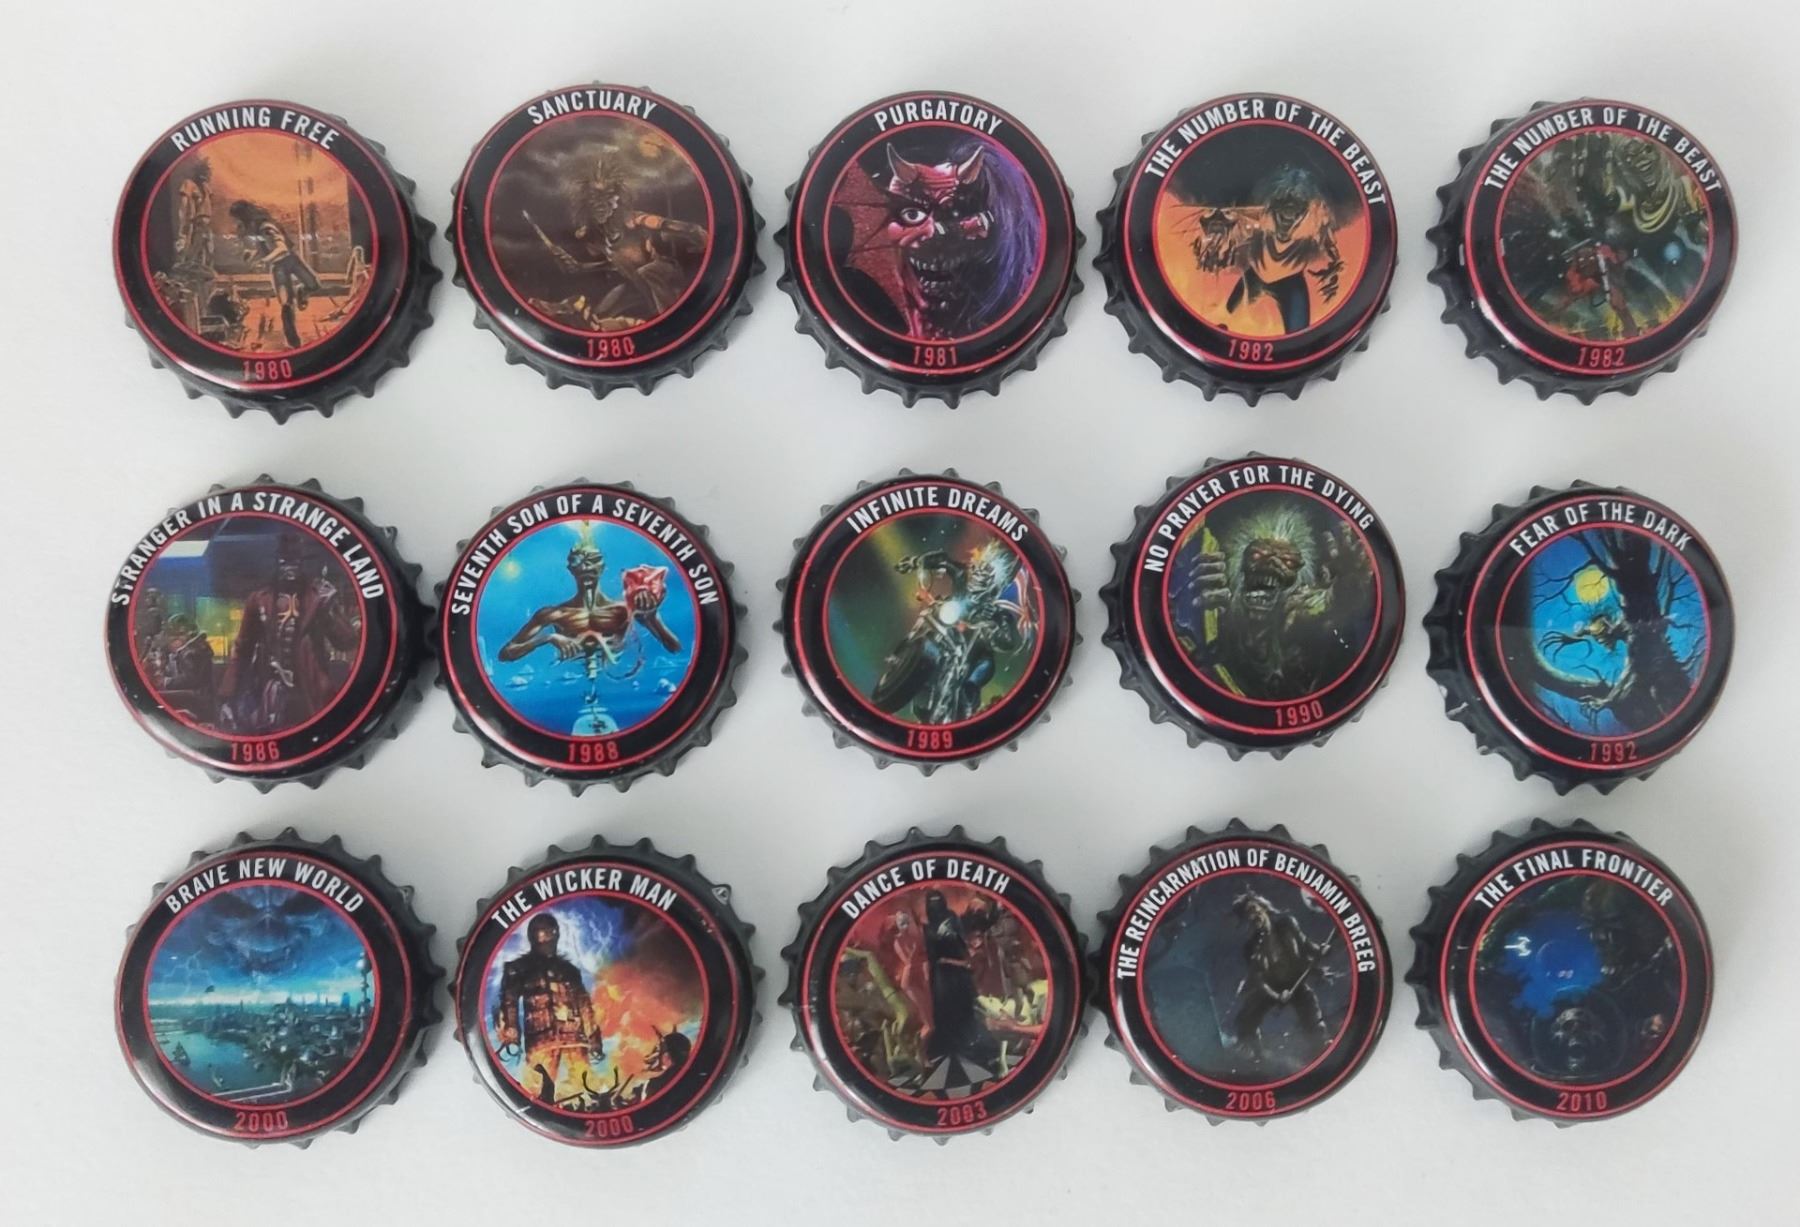 Fifteen limited edition Iron Maiden Trooper beer bottle caps